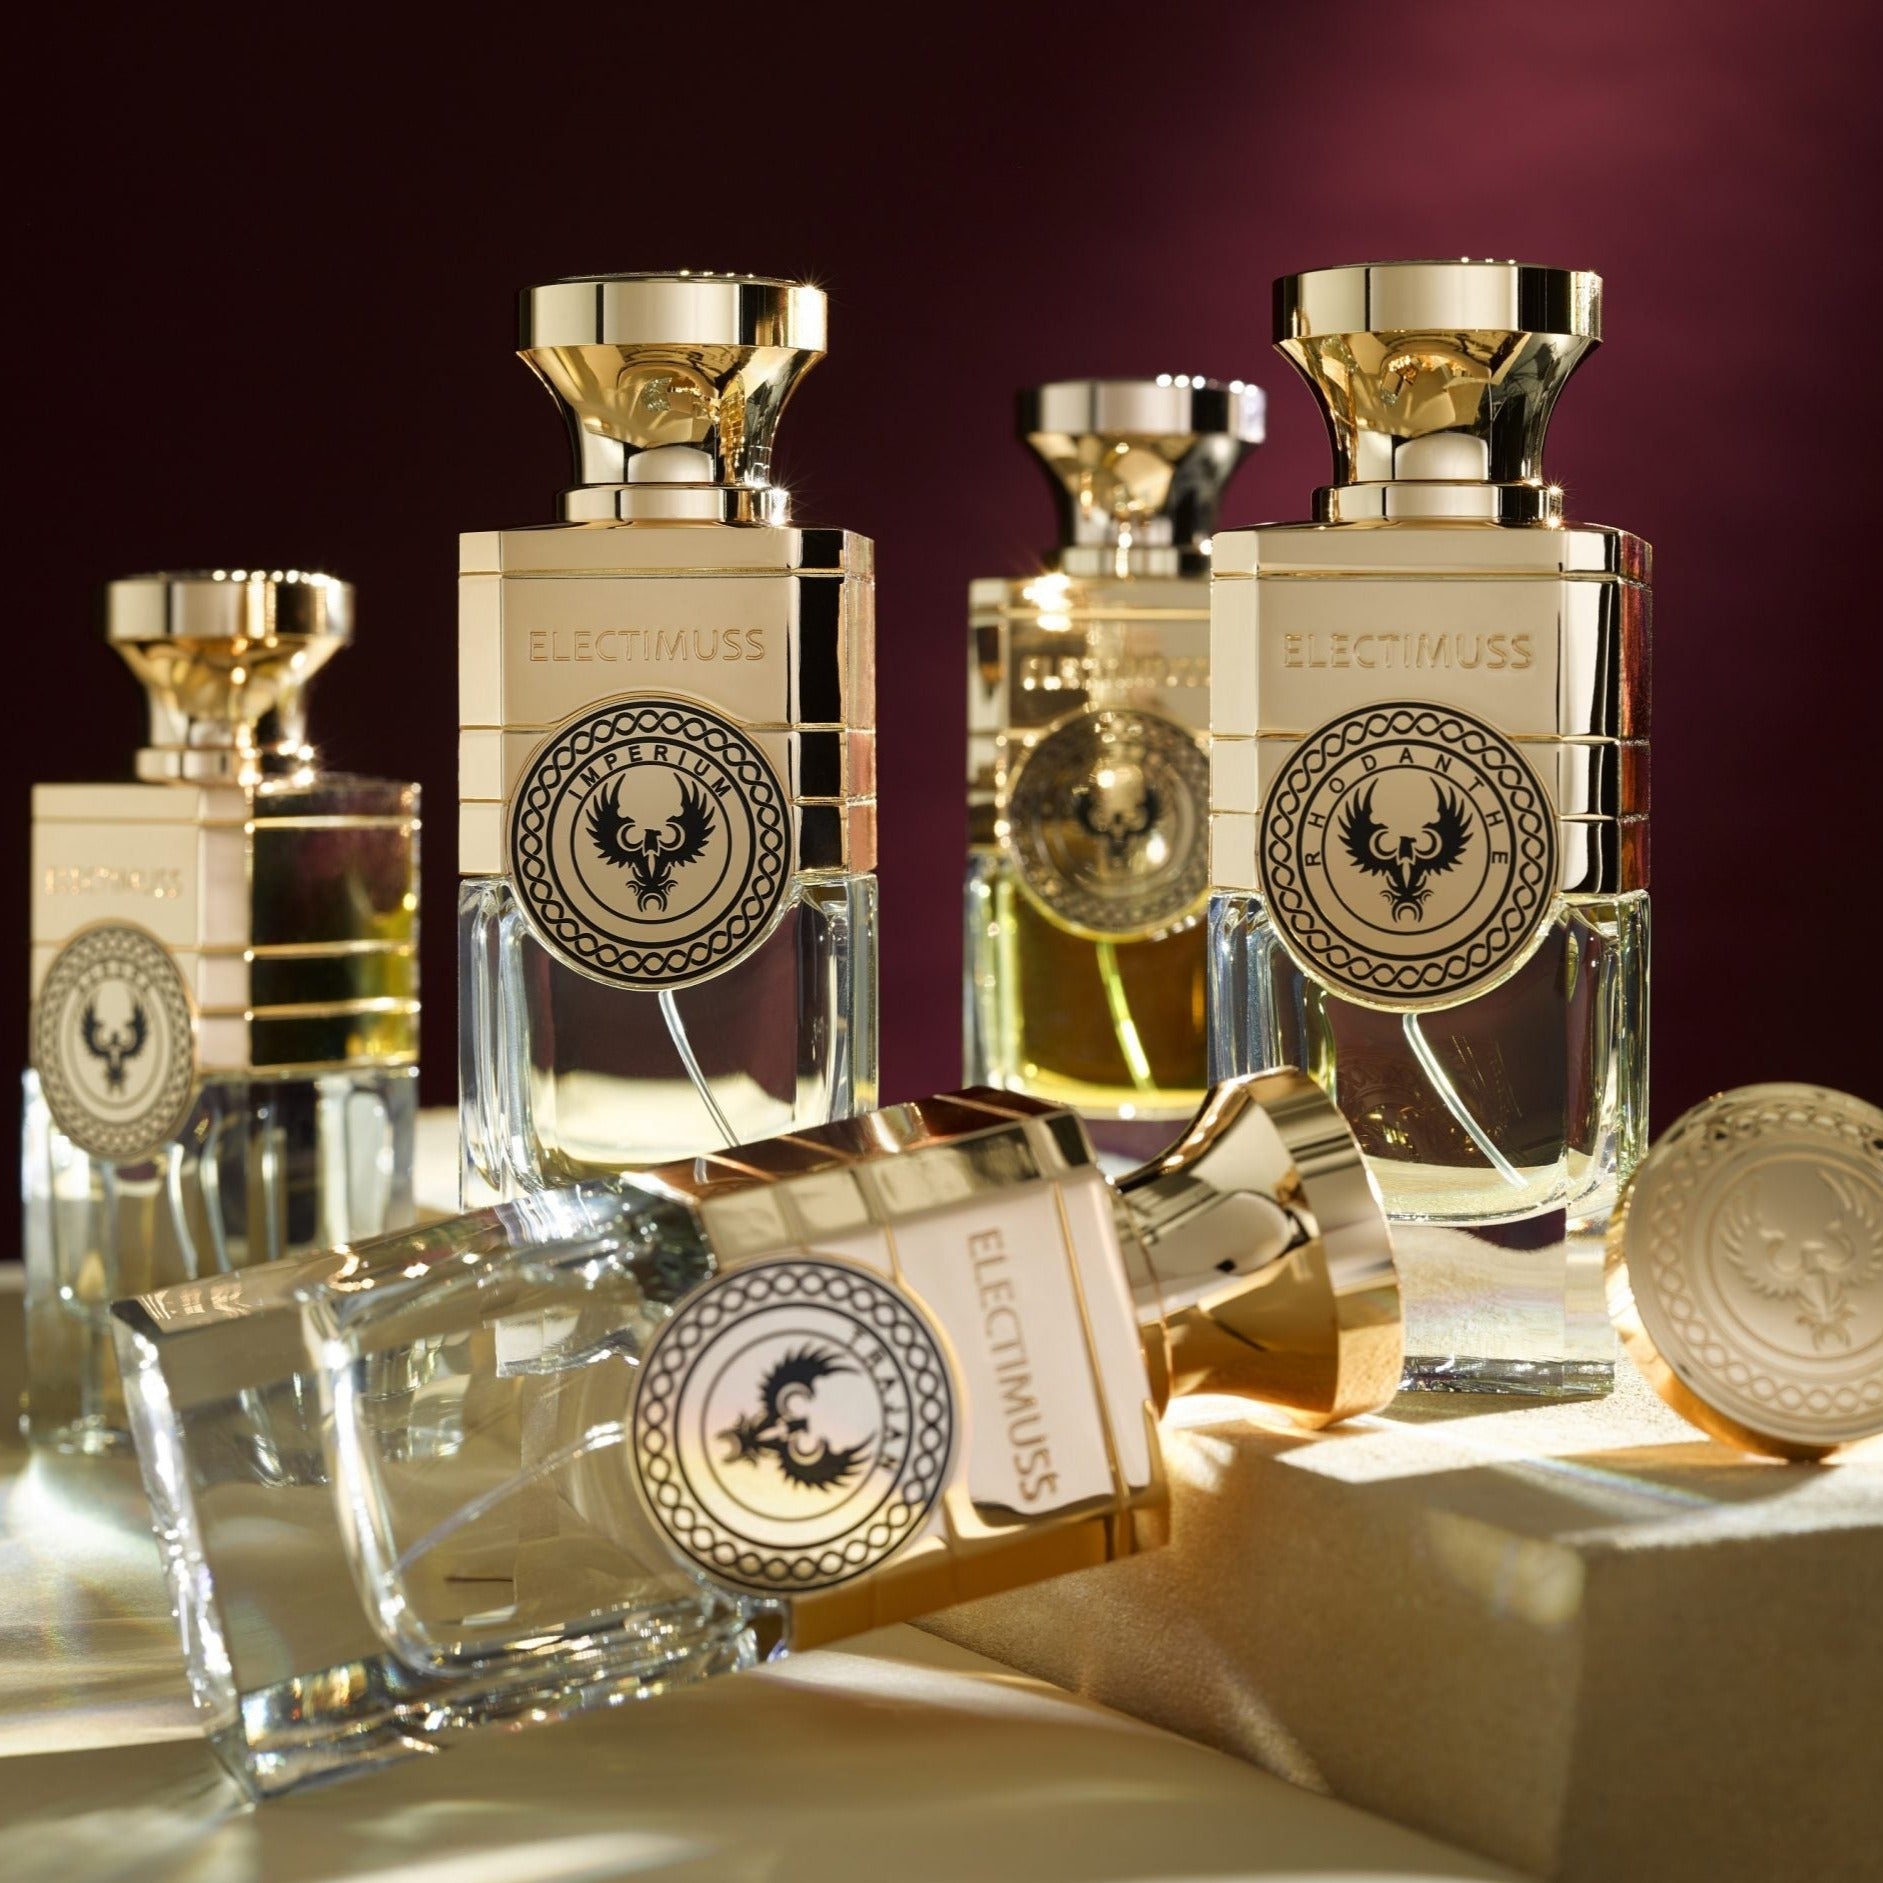 Electimuss Eternal Collection Fortuna Pure Parfum | My Perfume Shop Australia